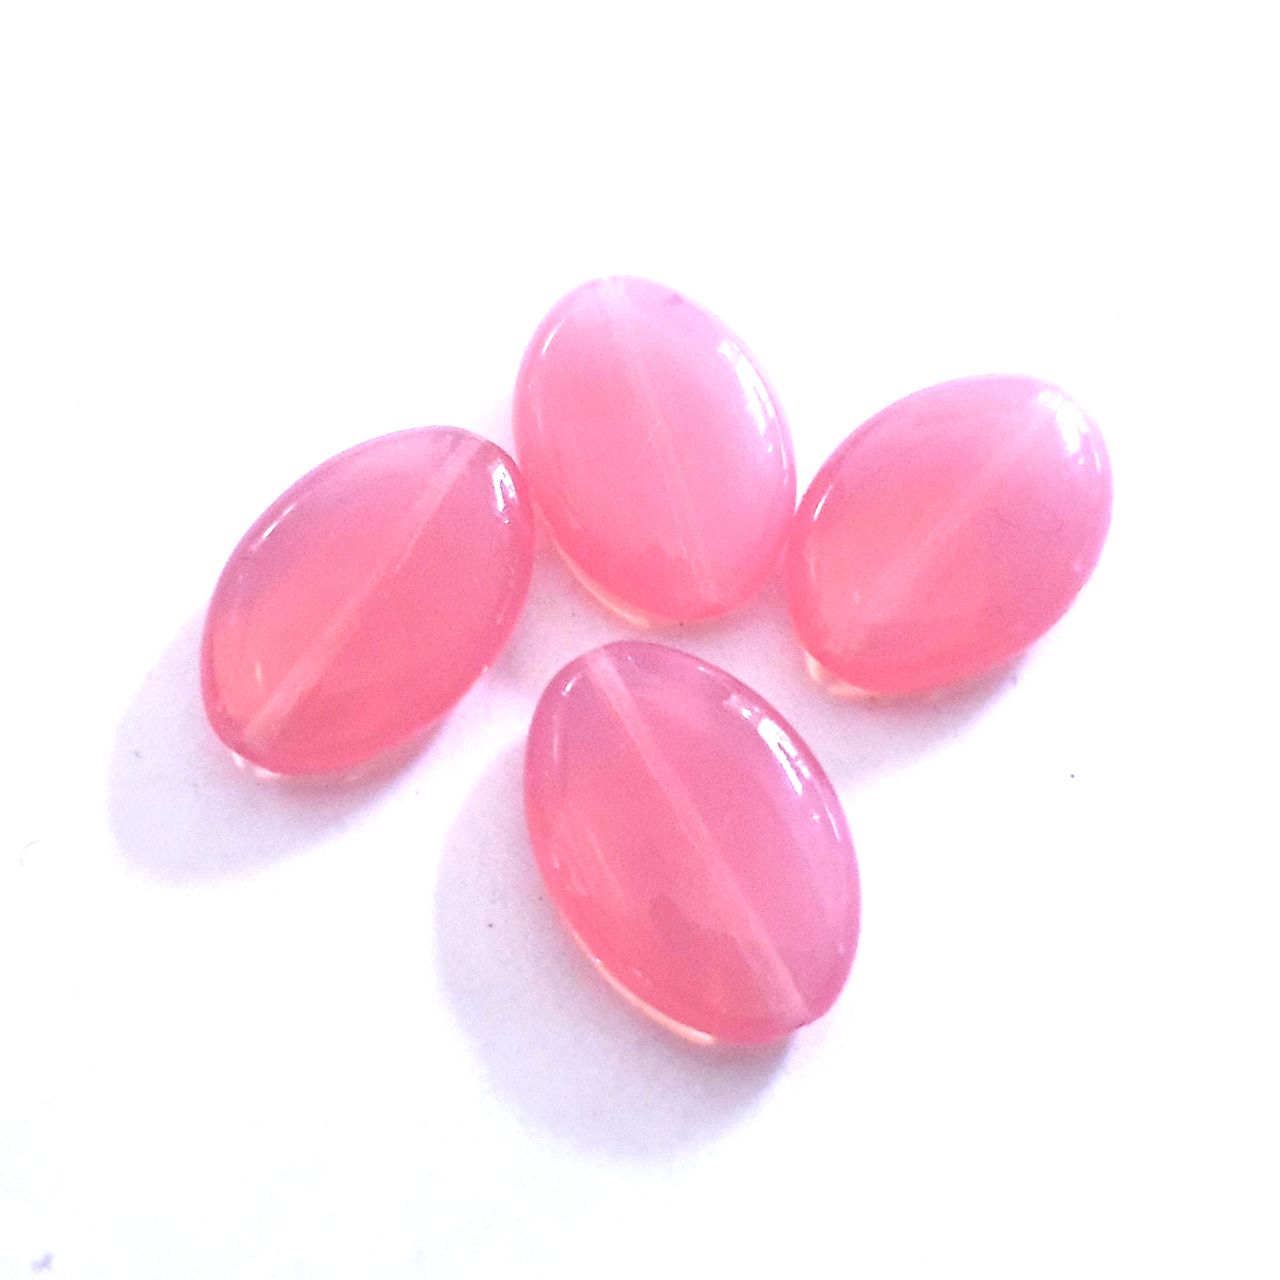 Flat Oval 20x14mm Pink Opalino Czech Glass Bead